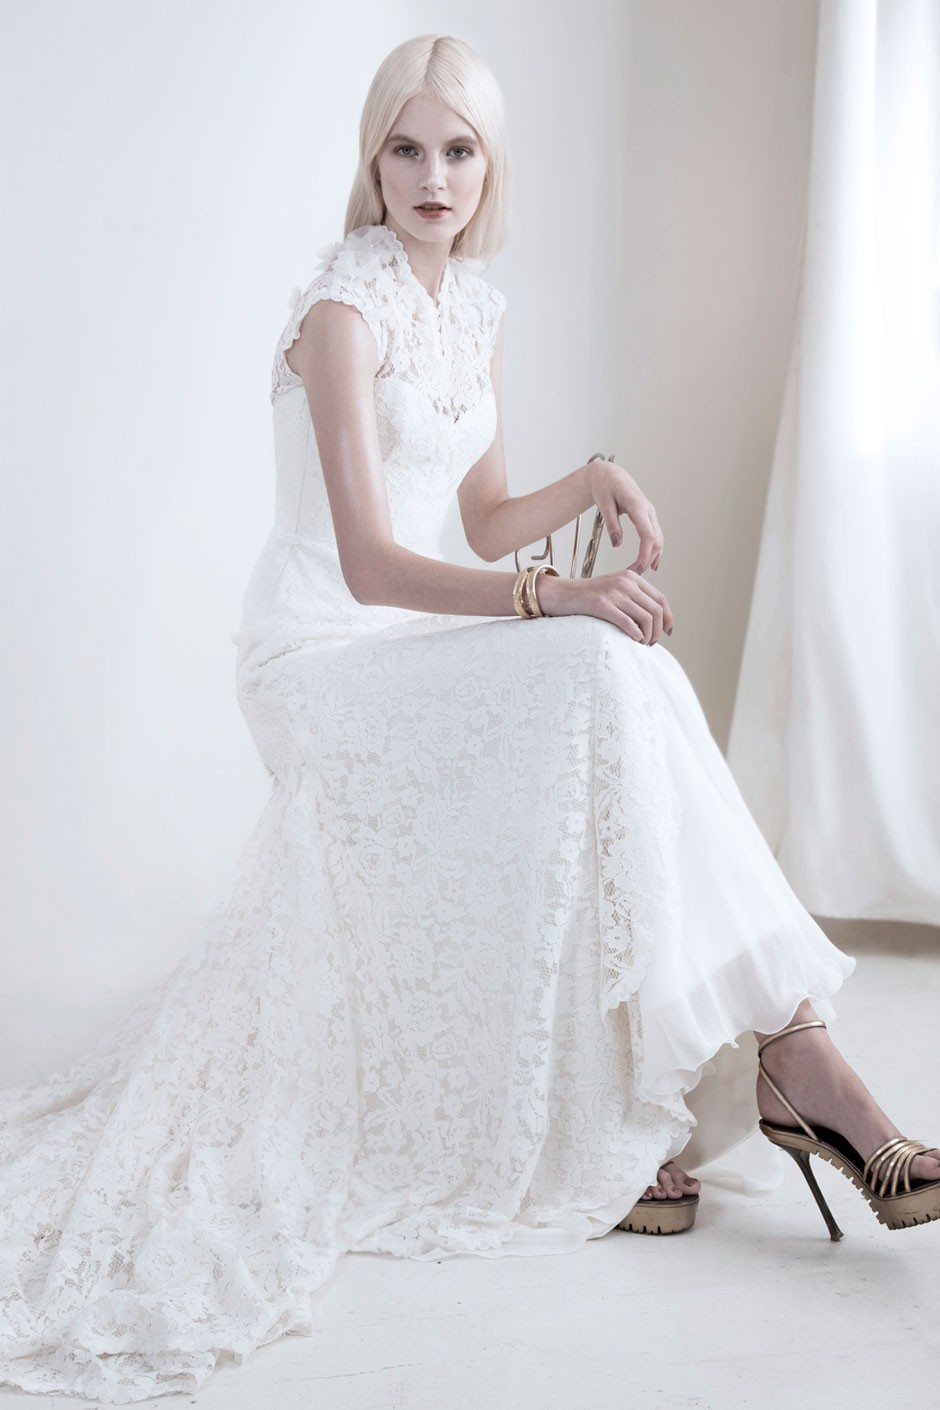 Mariana Hardwick Preowned Wedding Dress Save 73% - Stillwhite